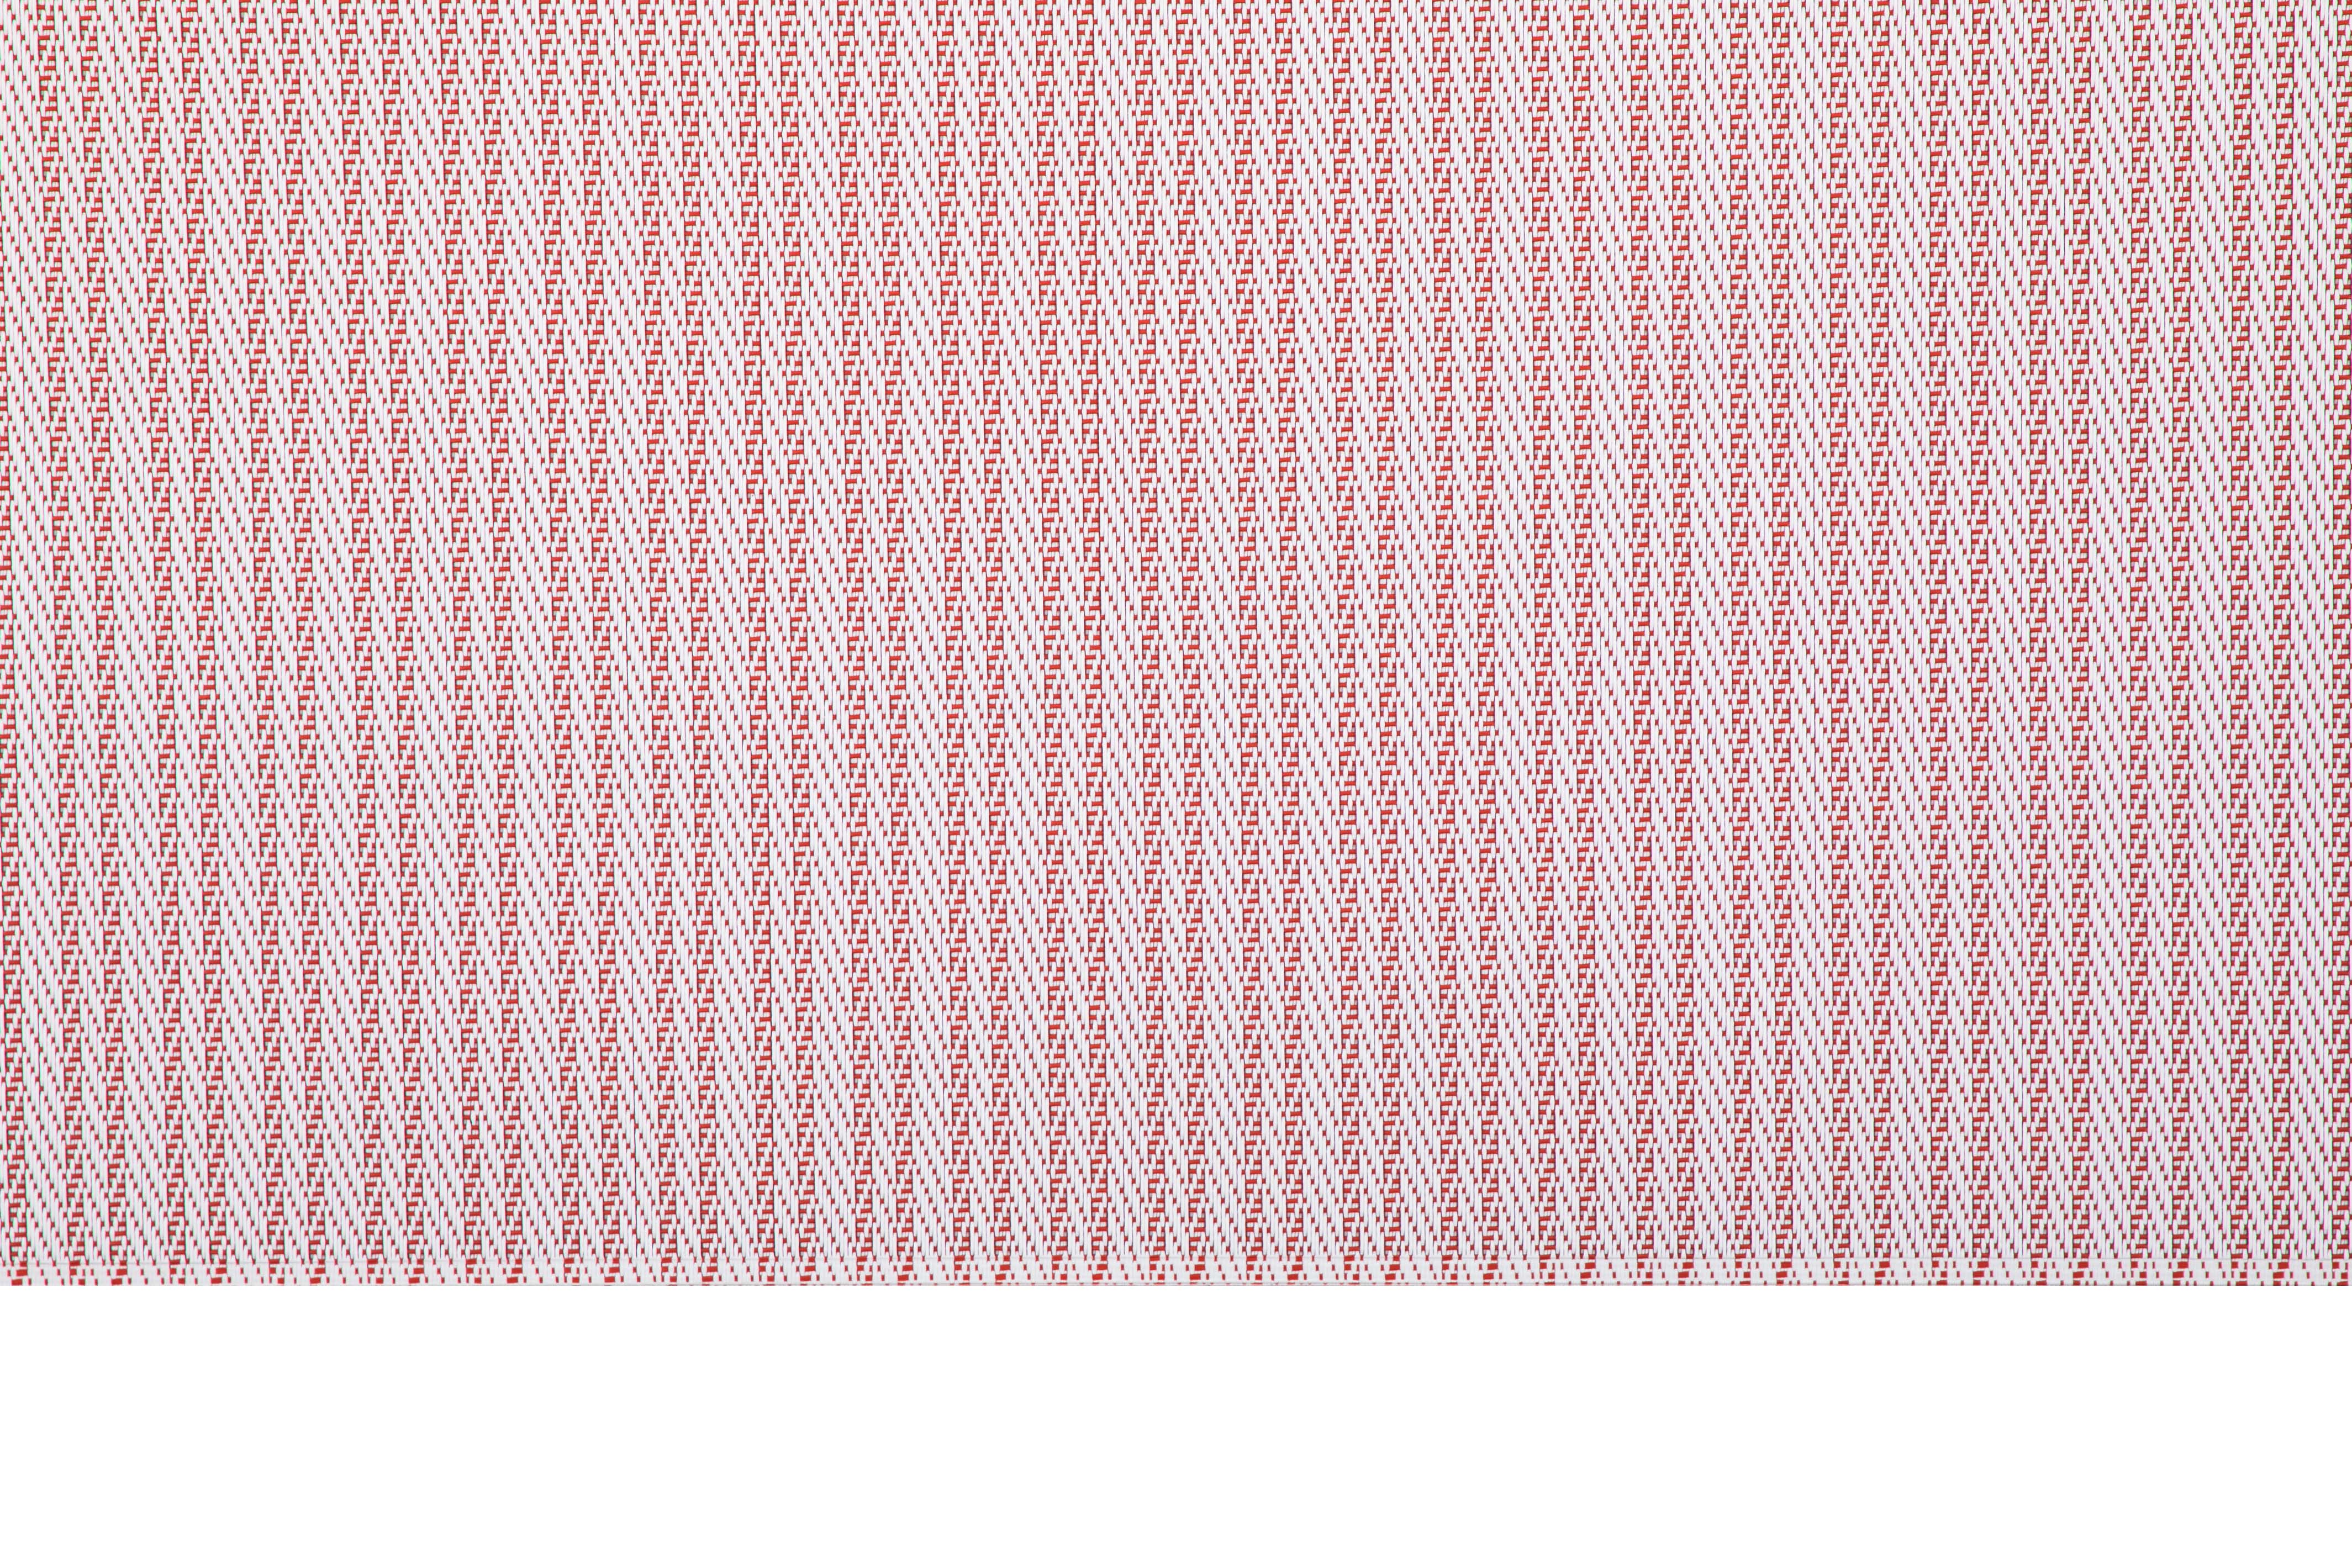 Placemat FALLON rectangular, 33x45cm, double stripe red